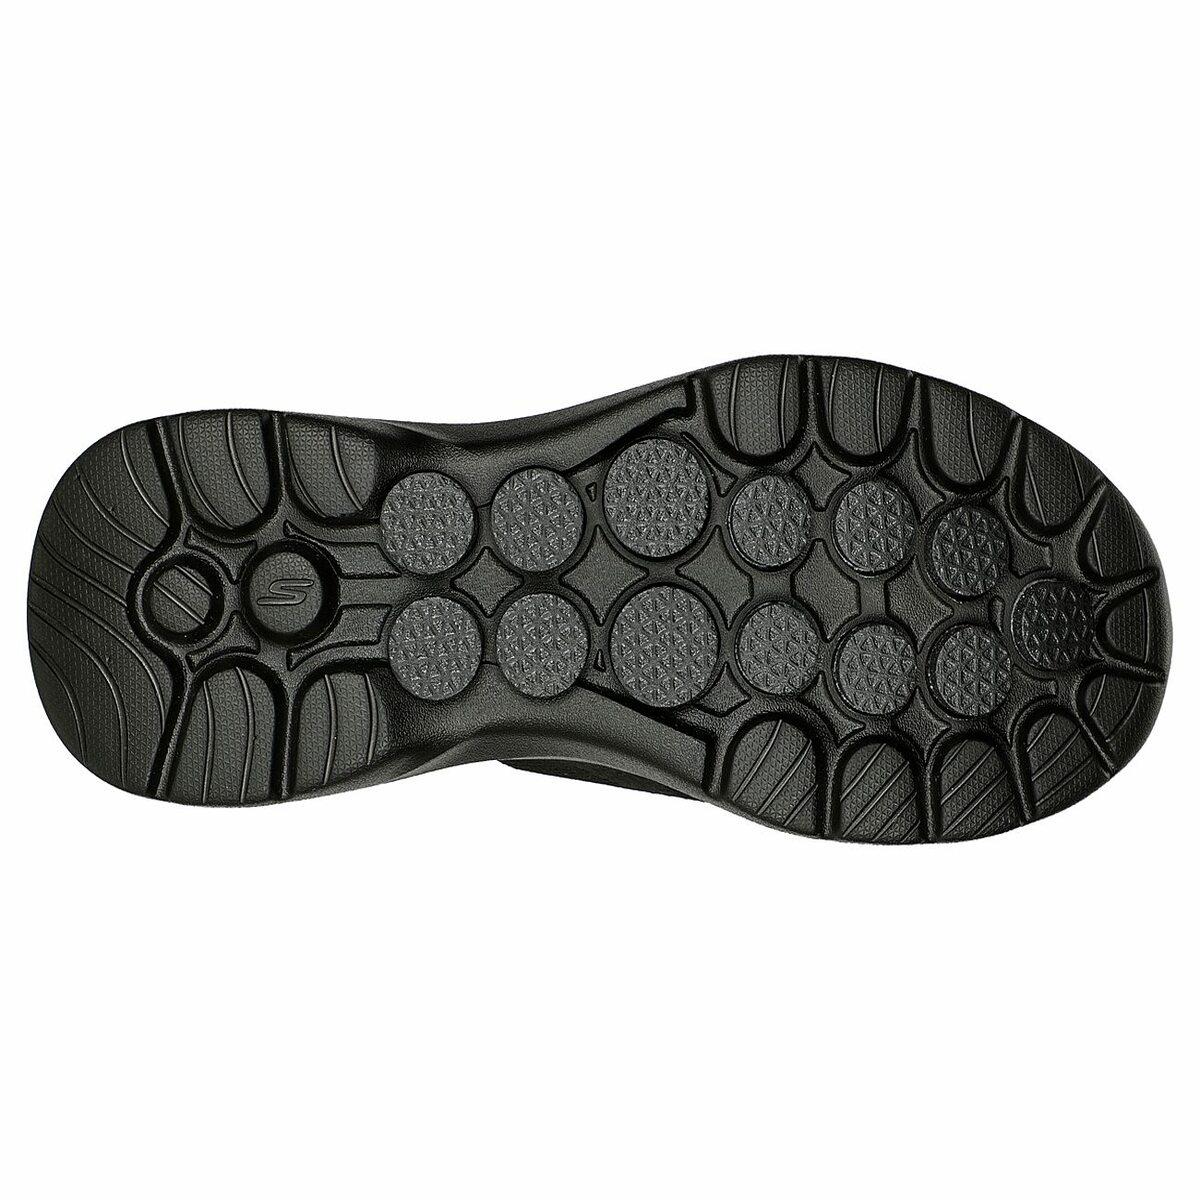 Buy Men Black Sports Walking Shoes Online | SKU: 158-216278-11-10-Metro ...